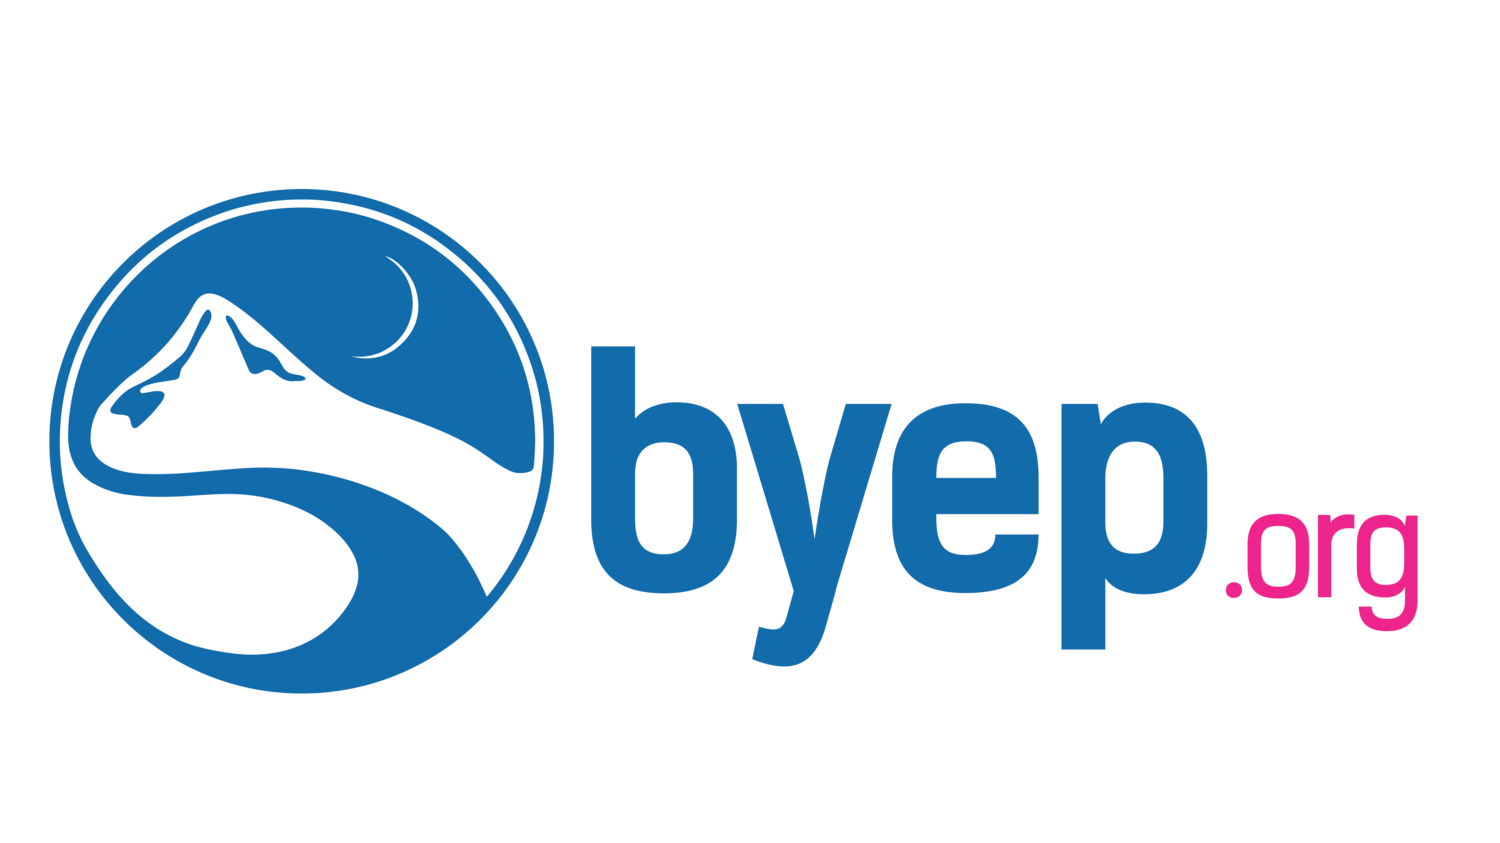 Byep org . Volunteering clipart youth empowerment